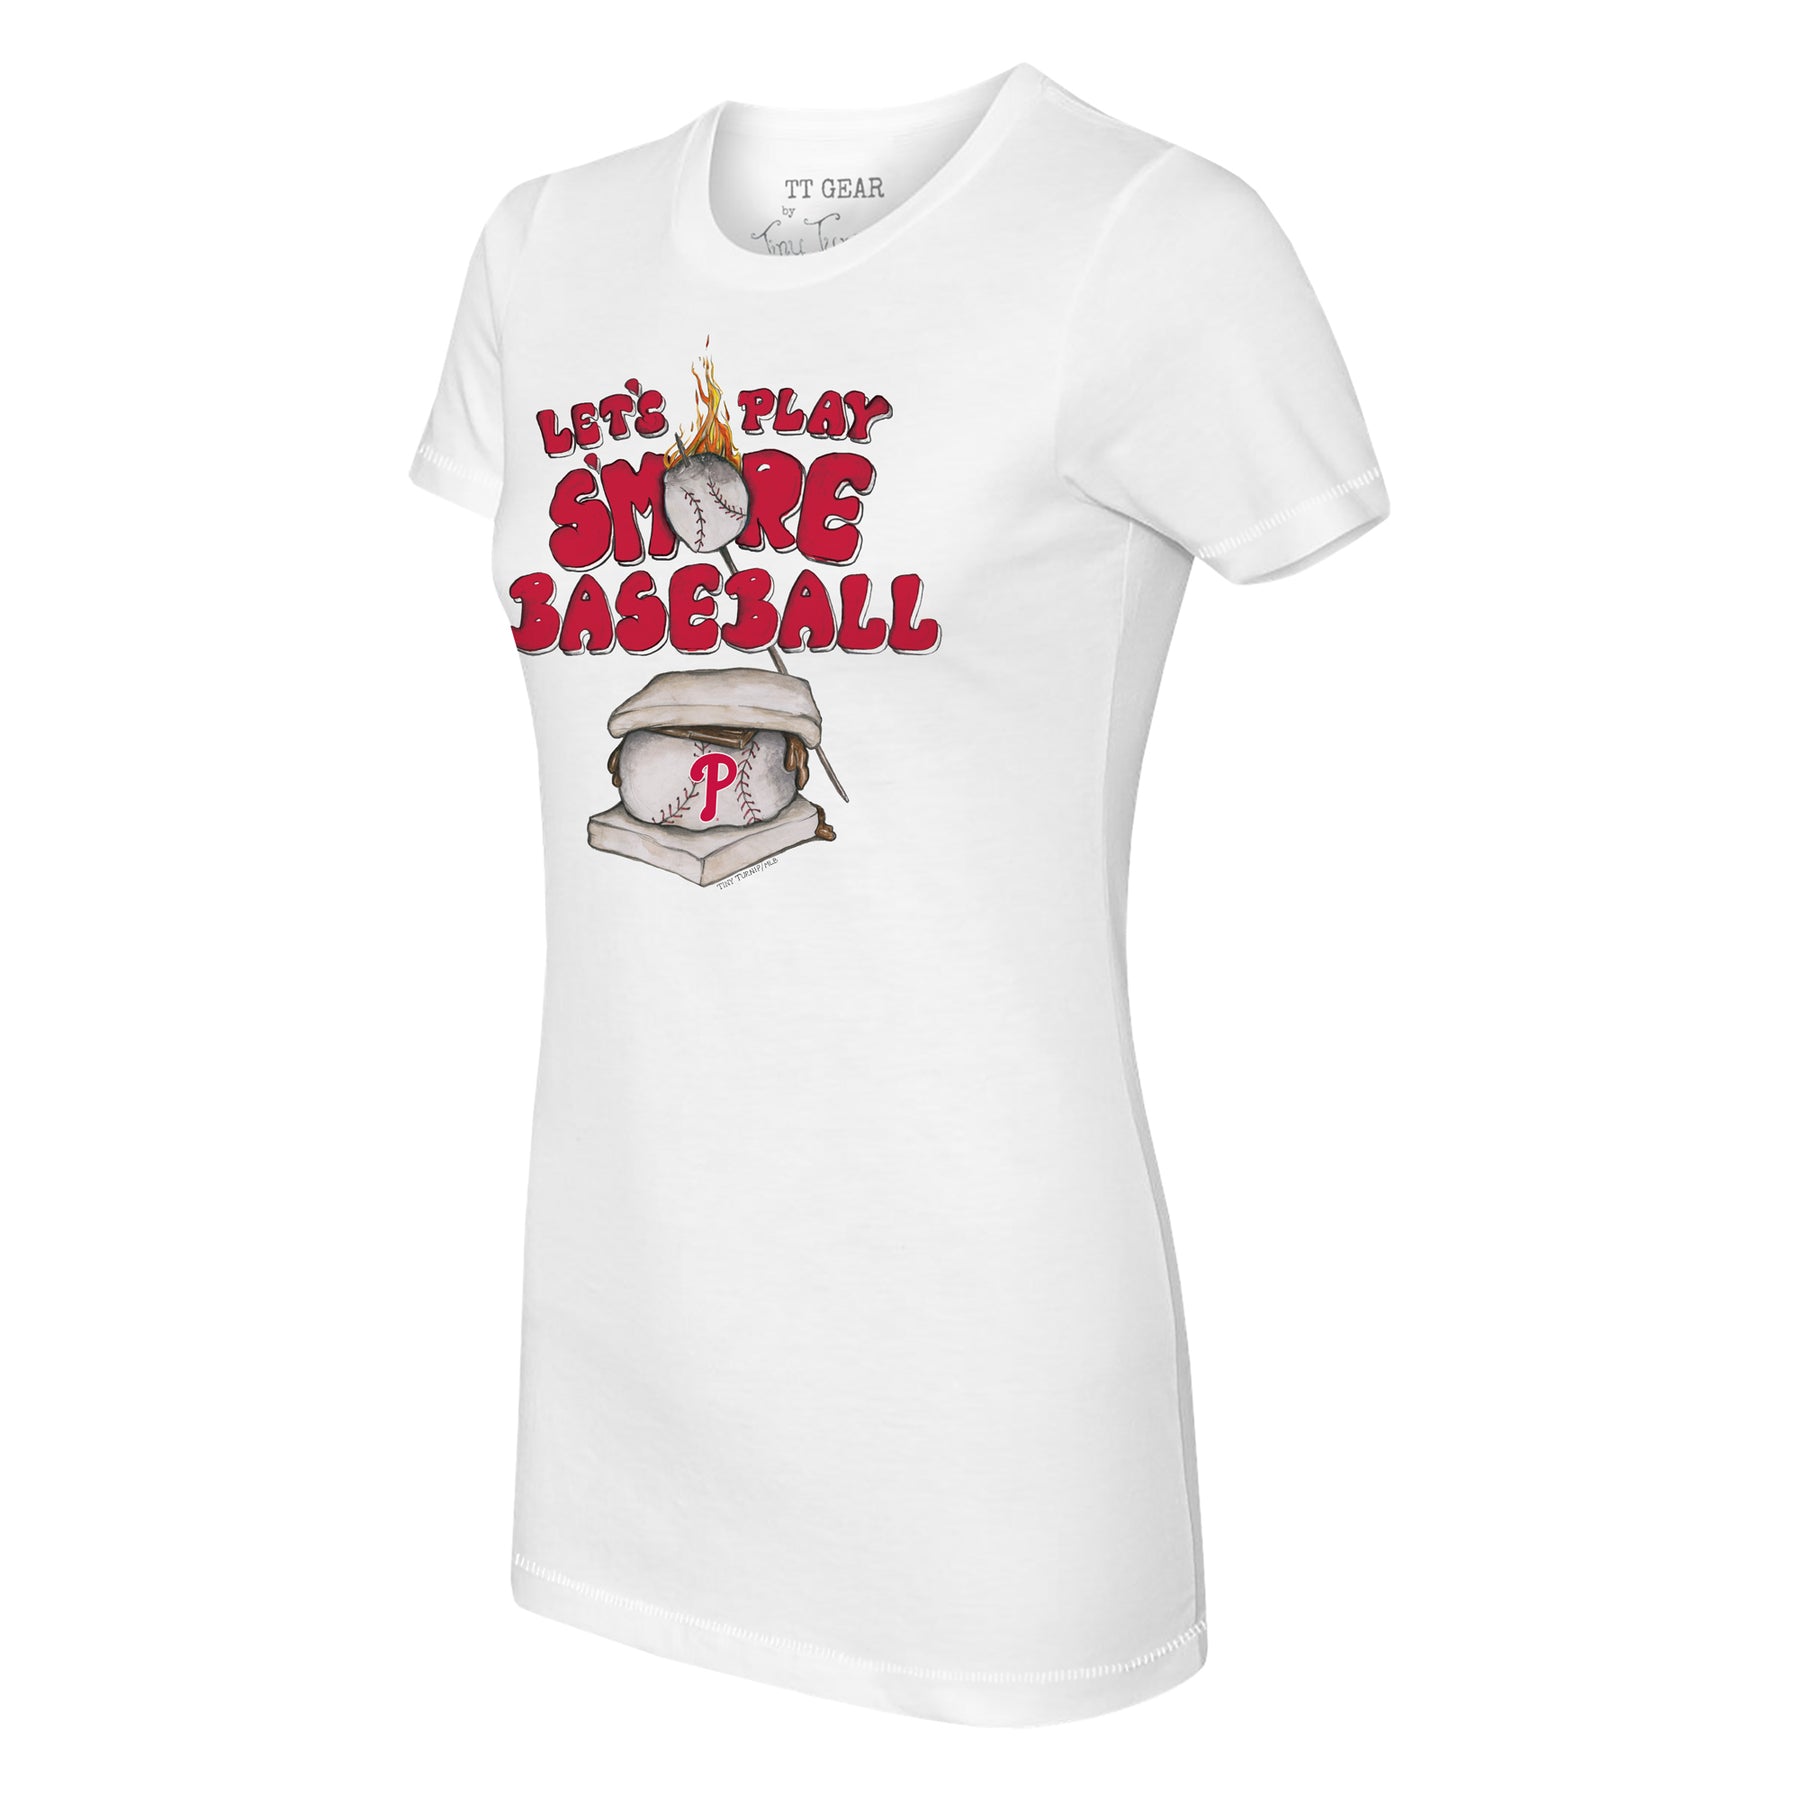 Philadelphia Phillies S'mores Tee Shirt Women's Large / White